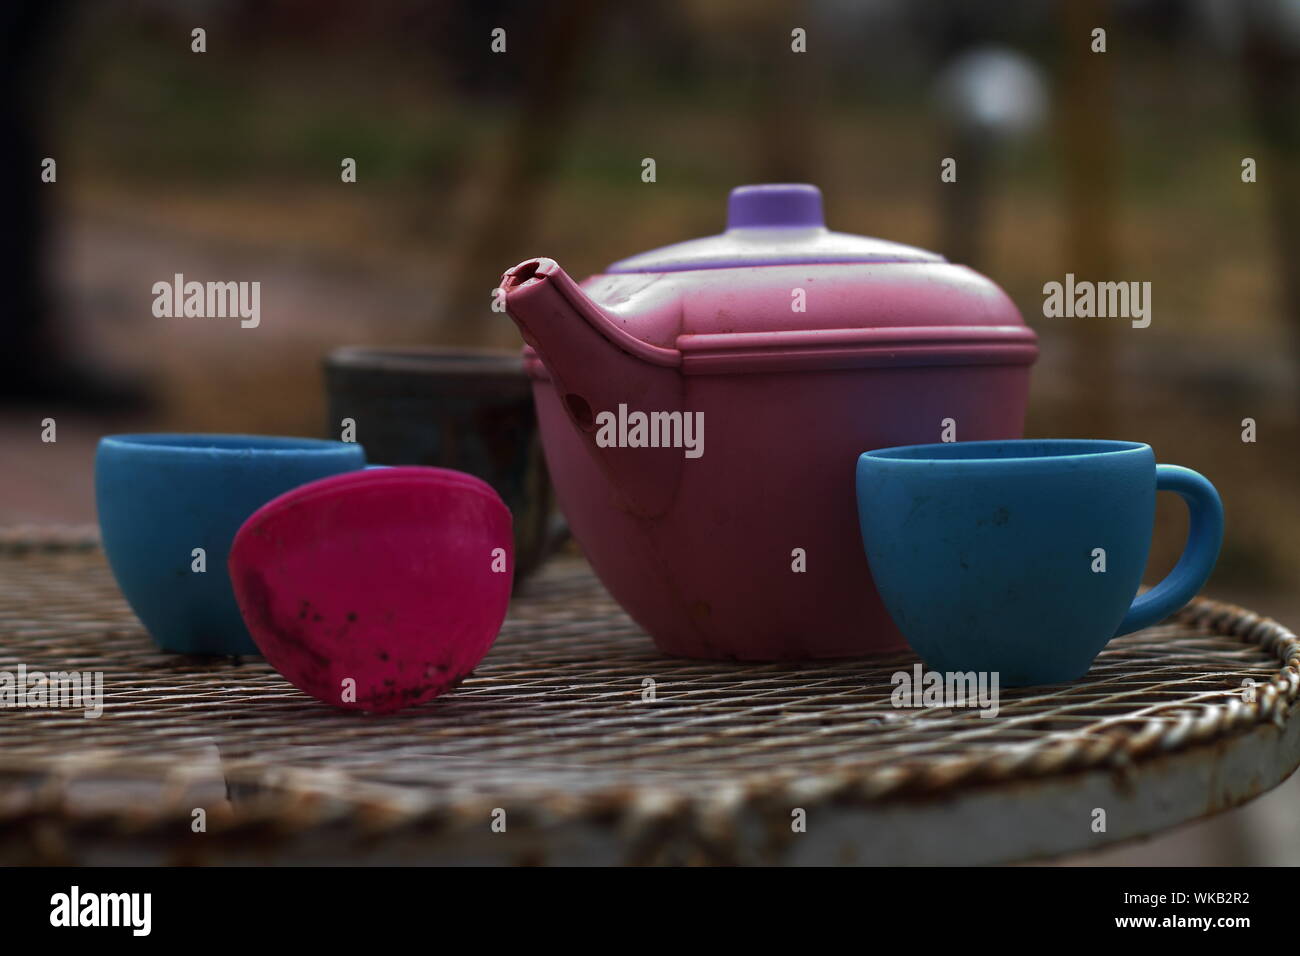 Juego de té de juguete fotografías e imágenes de alta resolución - Alamy